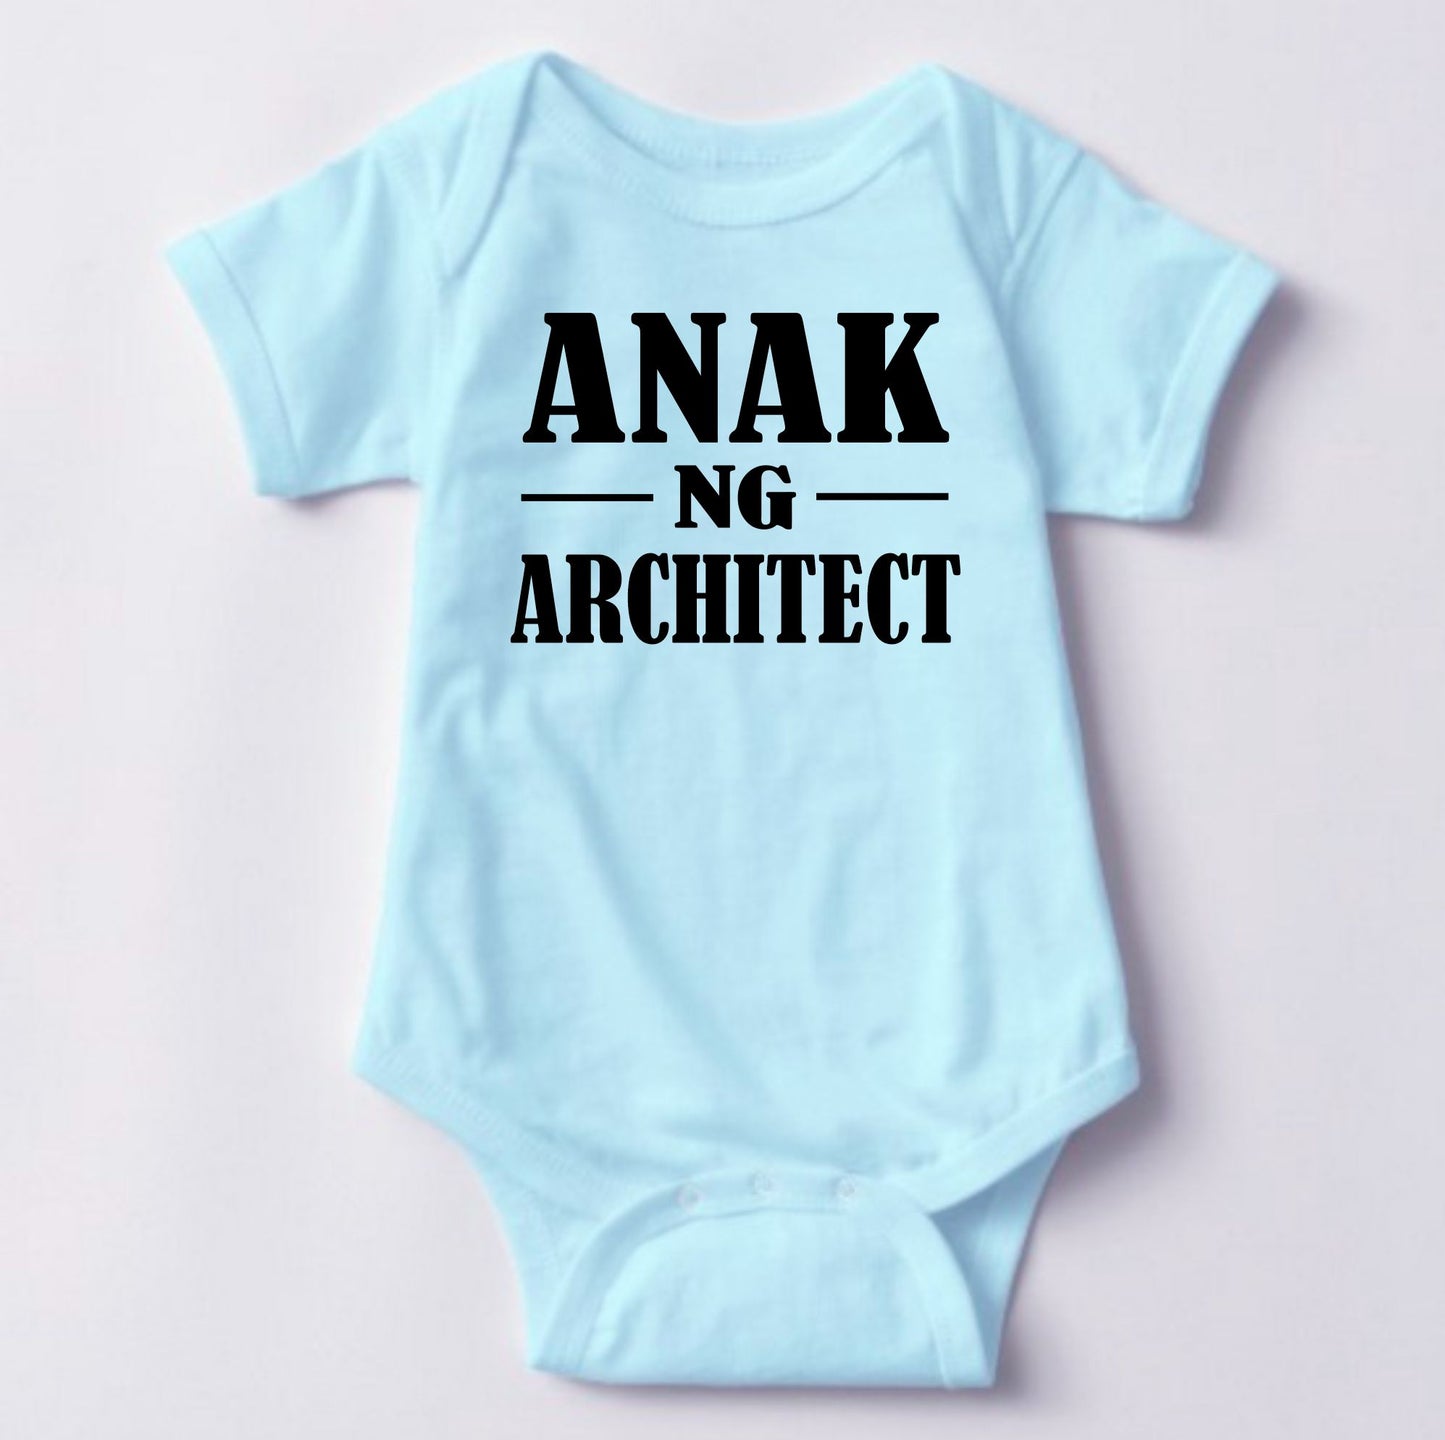 Baby Statement Onesies - Anak ng Architect